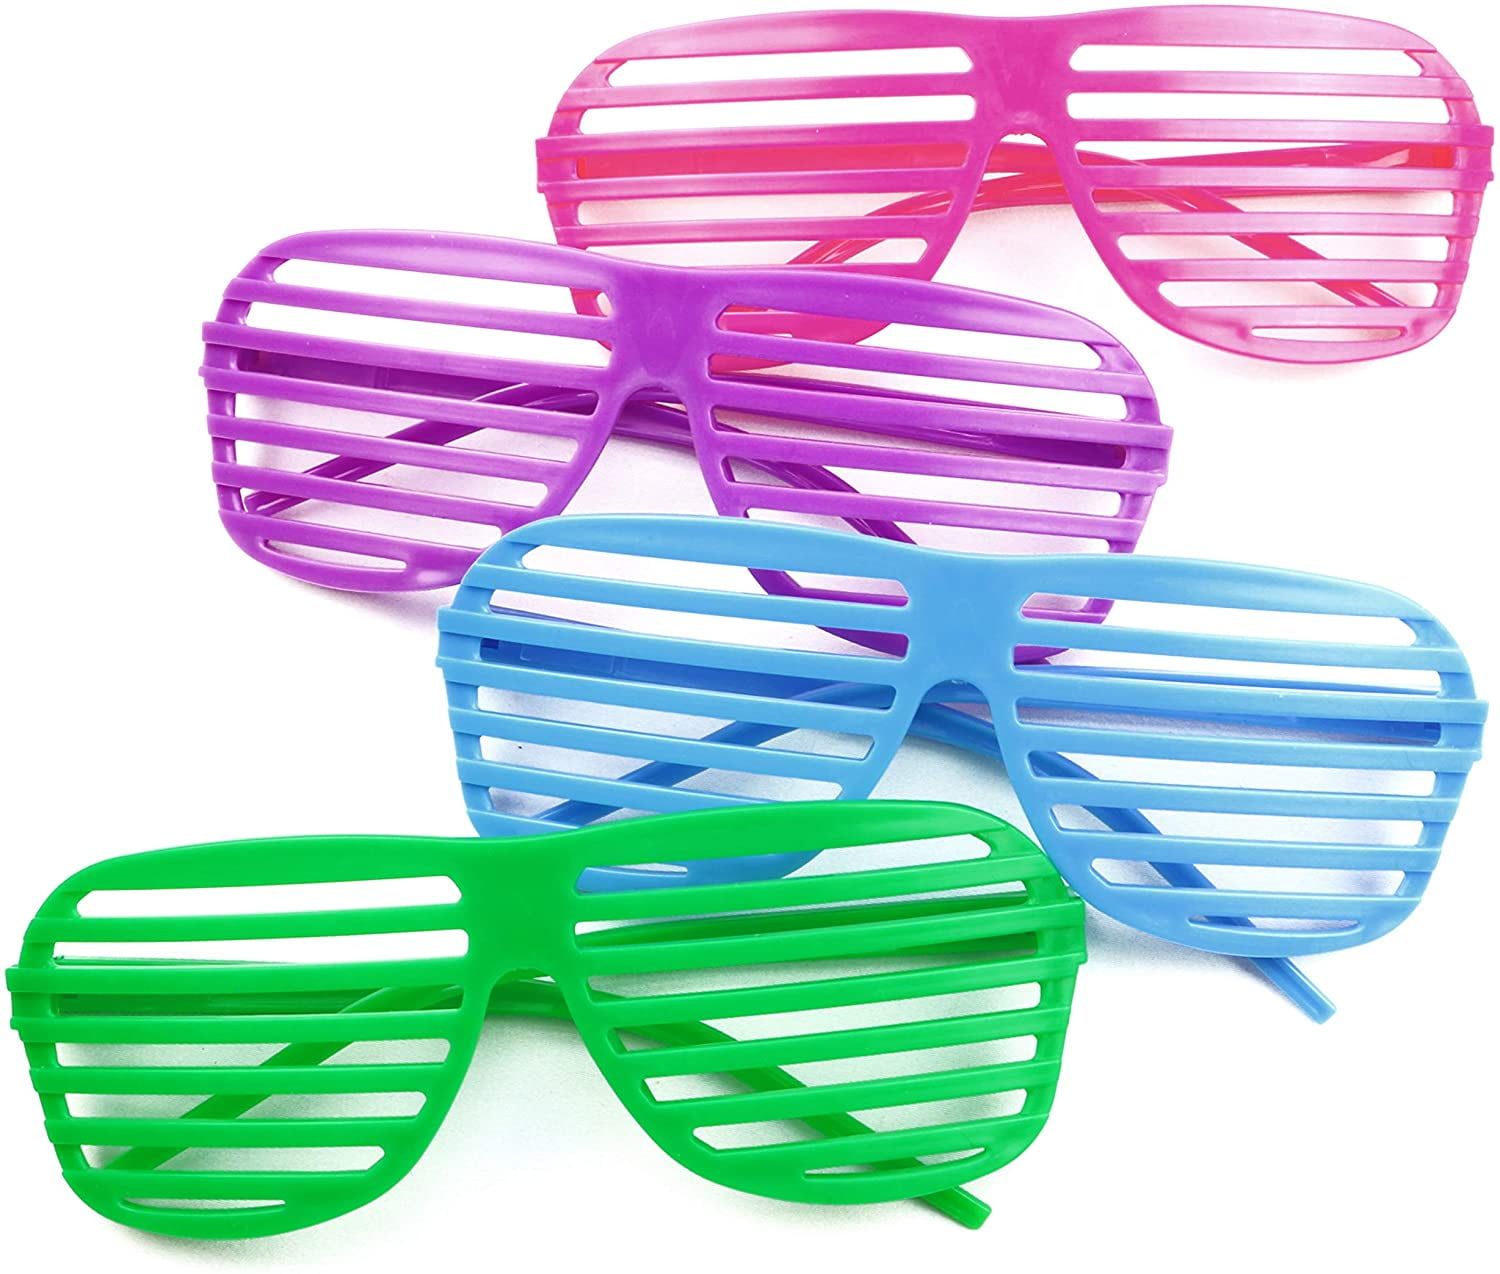 Pink Shutter Shades Slotted Sunglasses Fashion Eyewear 